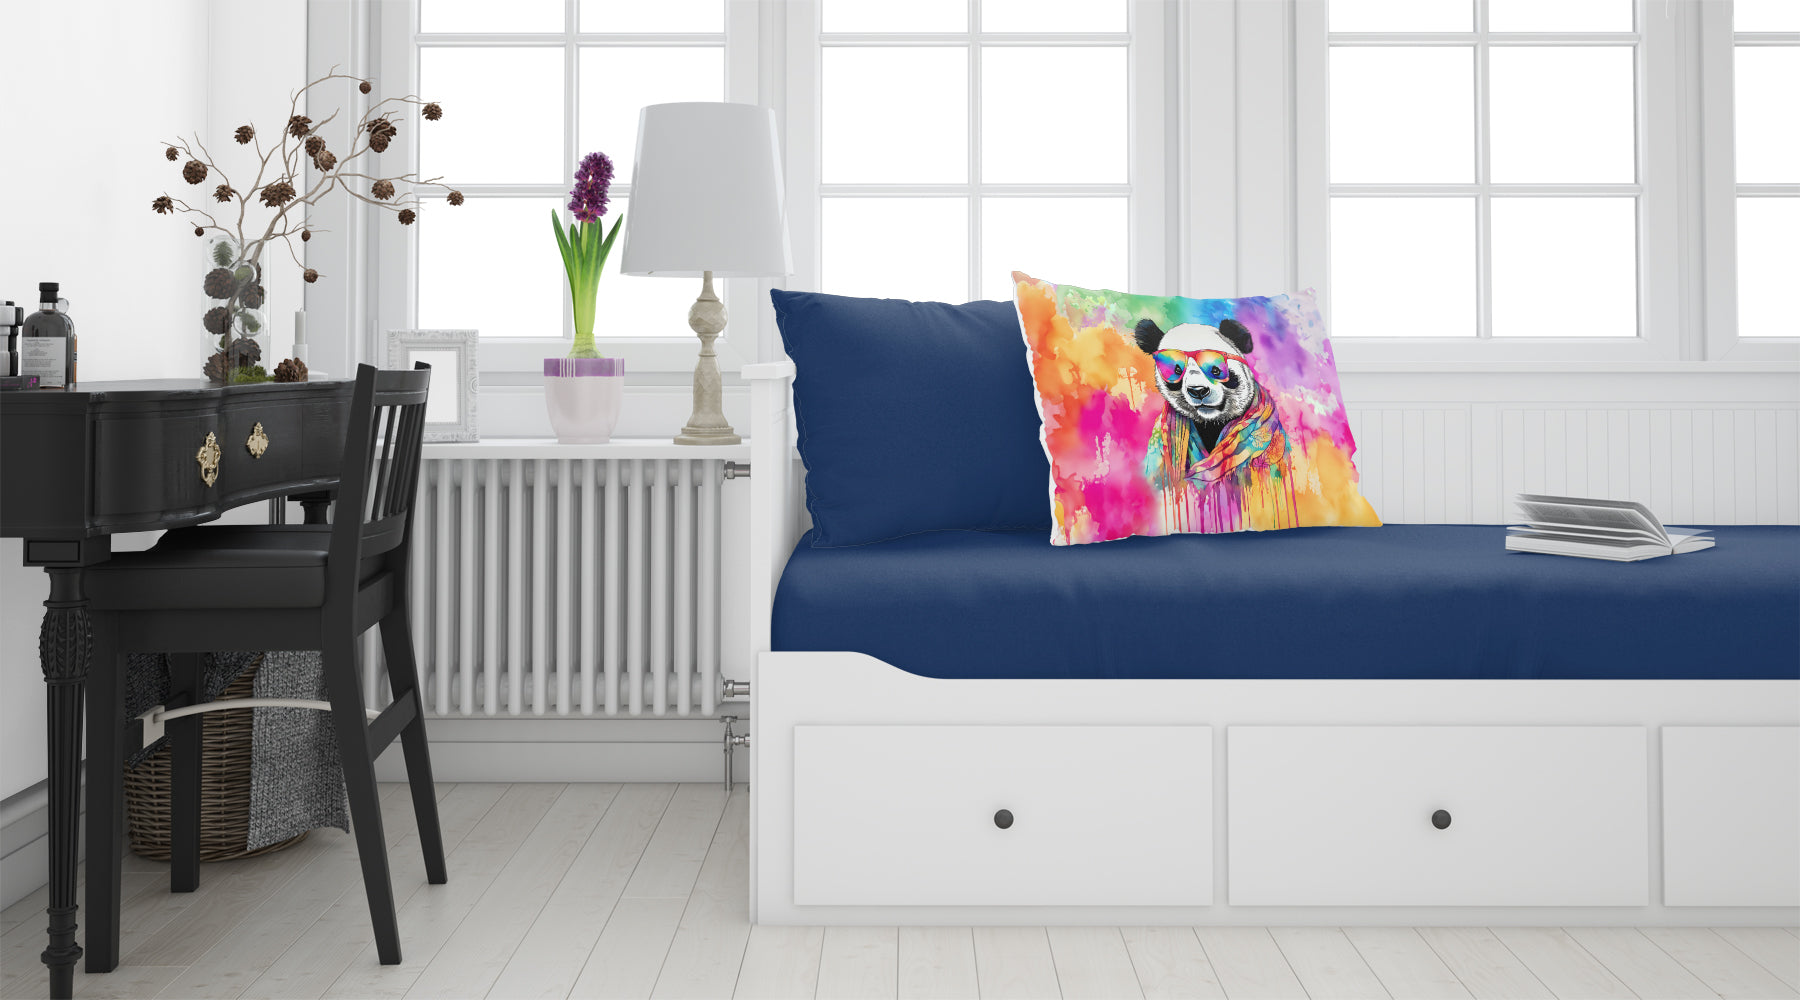 Buy this Hippie Animal Panda Standard Pillowcase